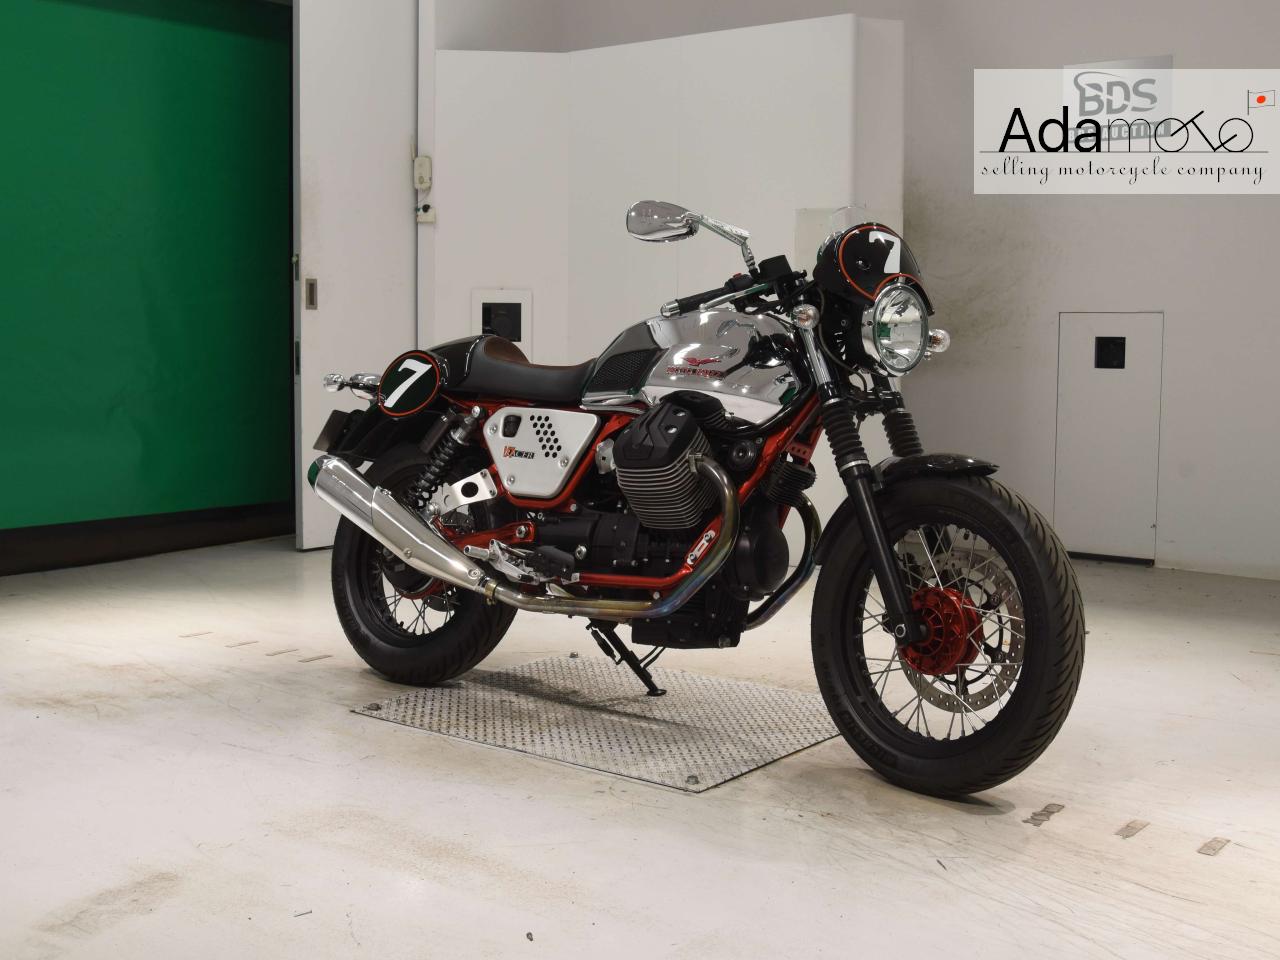 Moto Guzzi V7 racer - Adamoto - Motorcycles from Japan